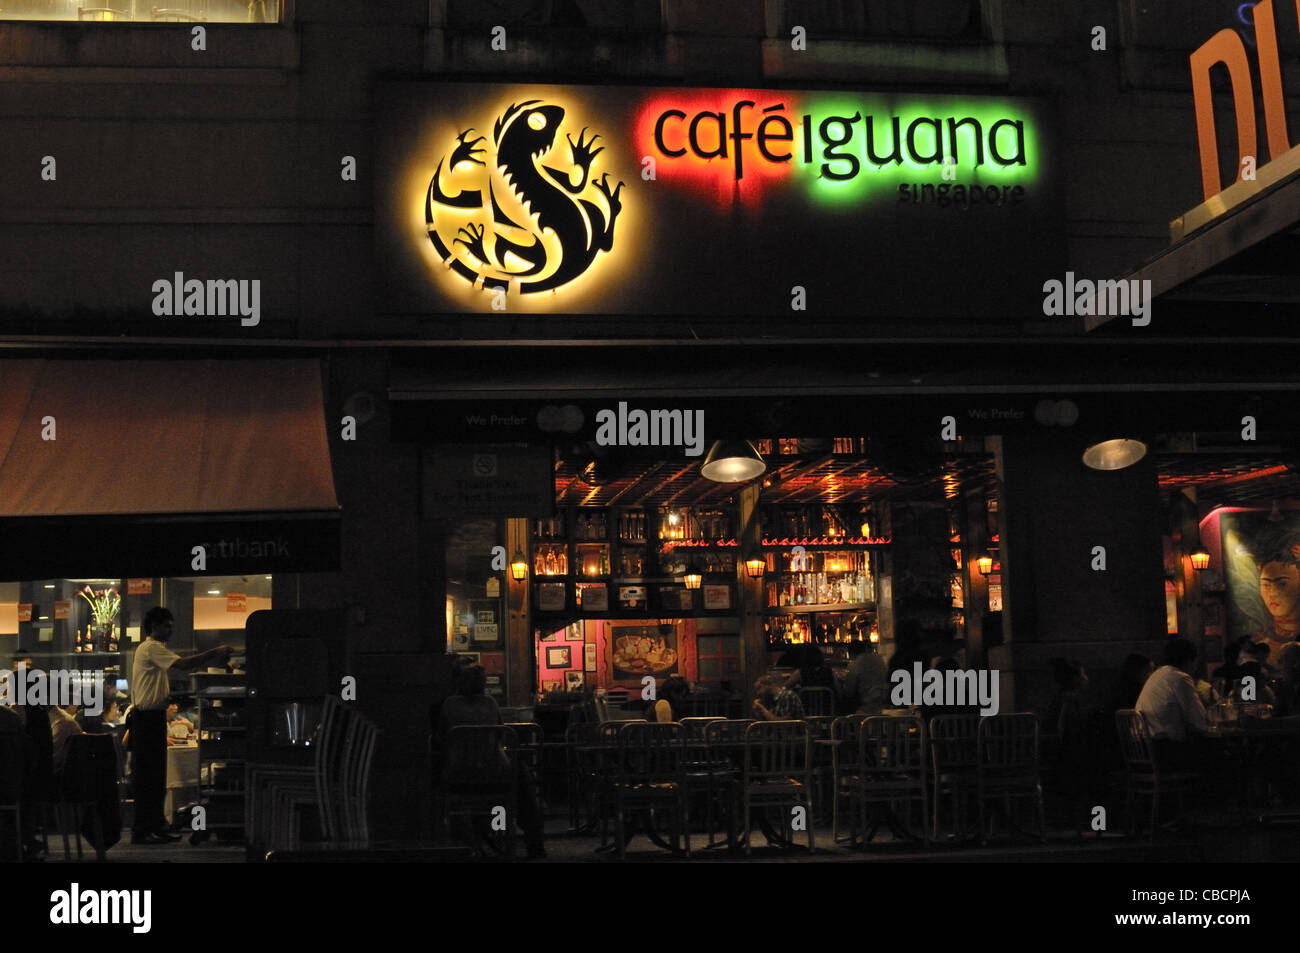 Cafe Iguana at Clarke Quay, Singapore Stock Photo - Alamy